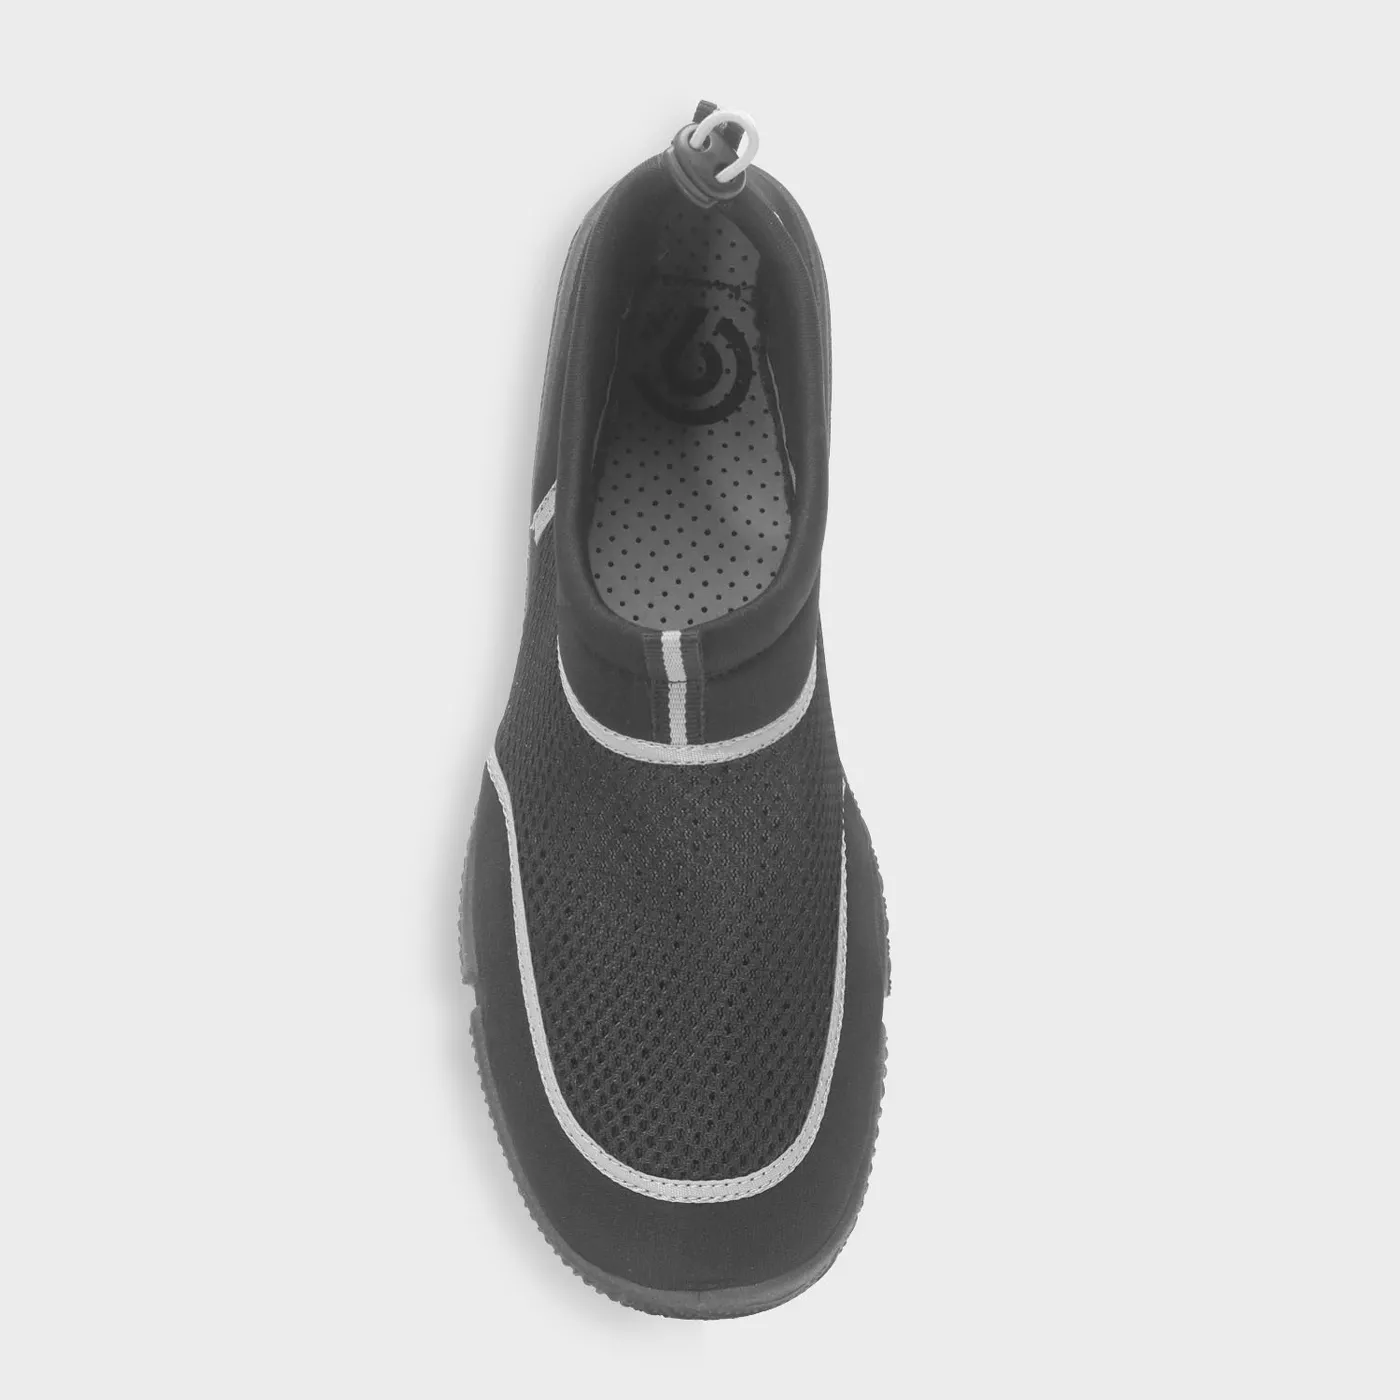 Men's Titus Water shoes - C9 ChampionÂ® Black - image 1 of 3